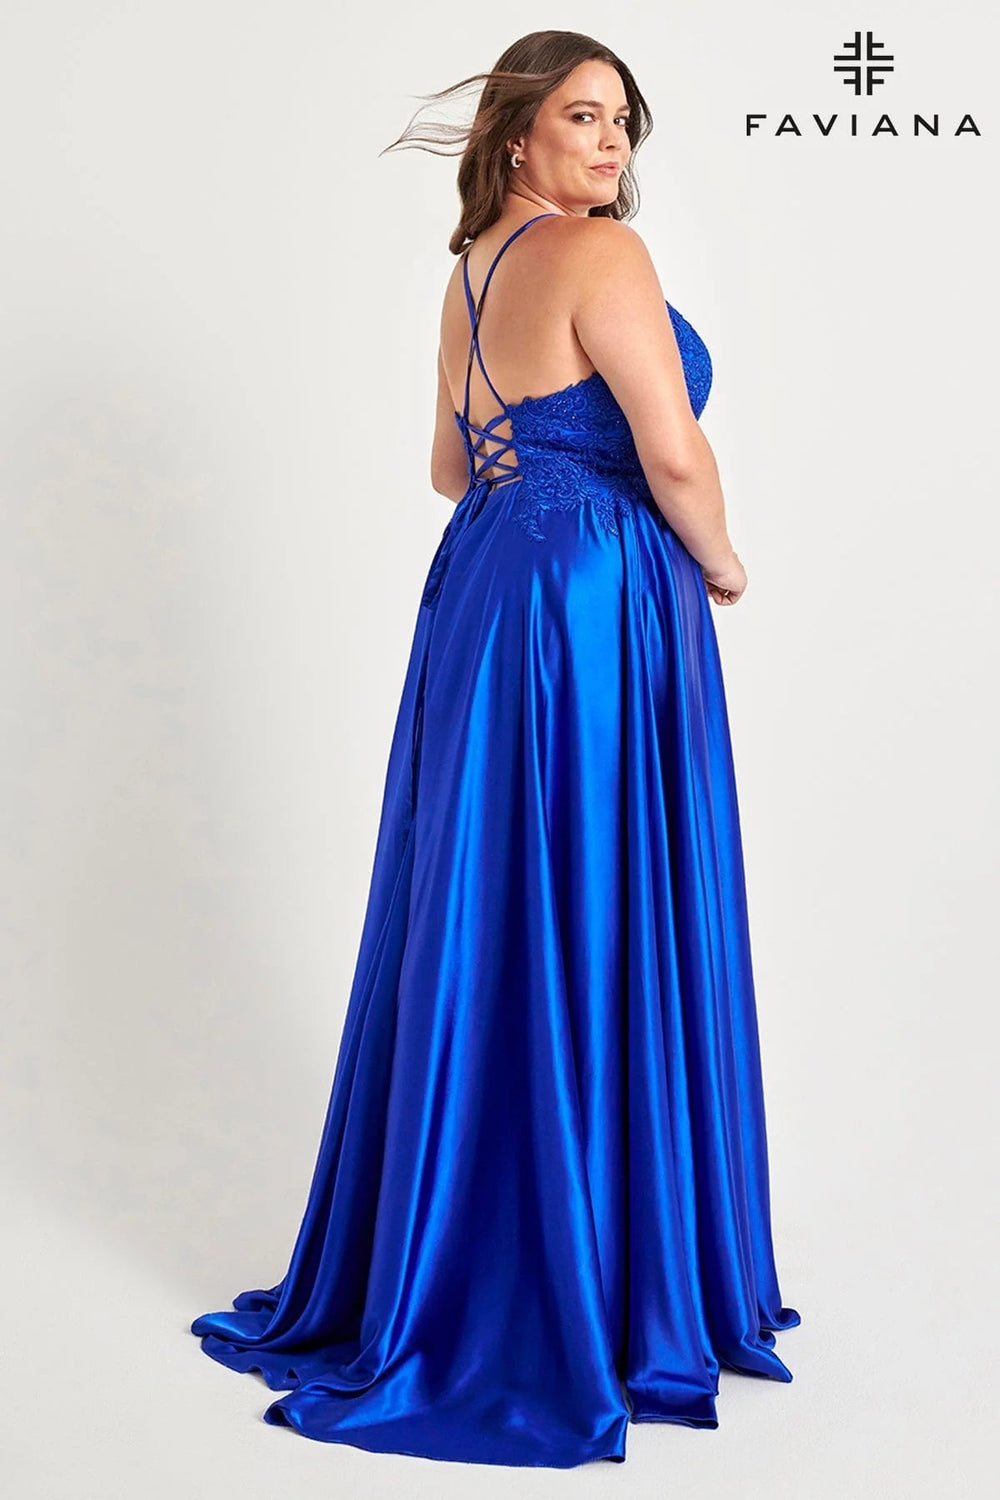 Faviana Evening Gown Plus Size FAVIANA 9498 Dress